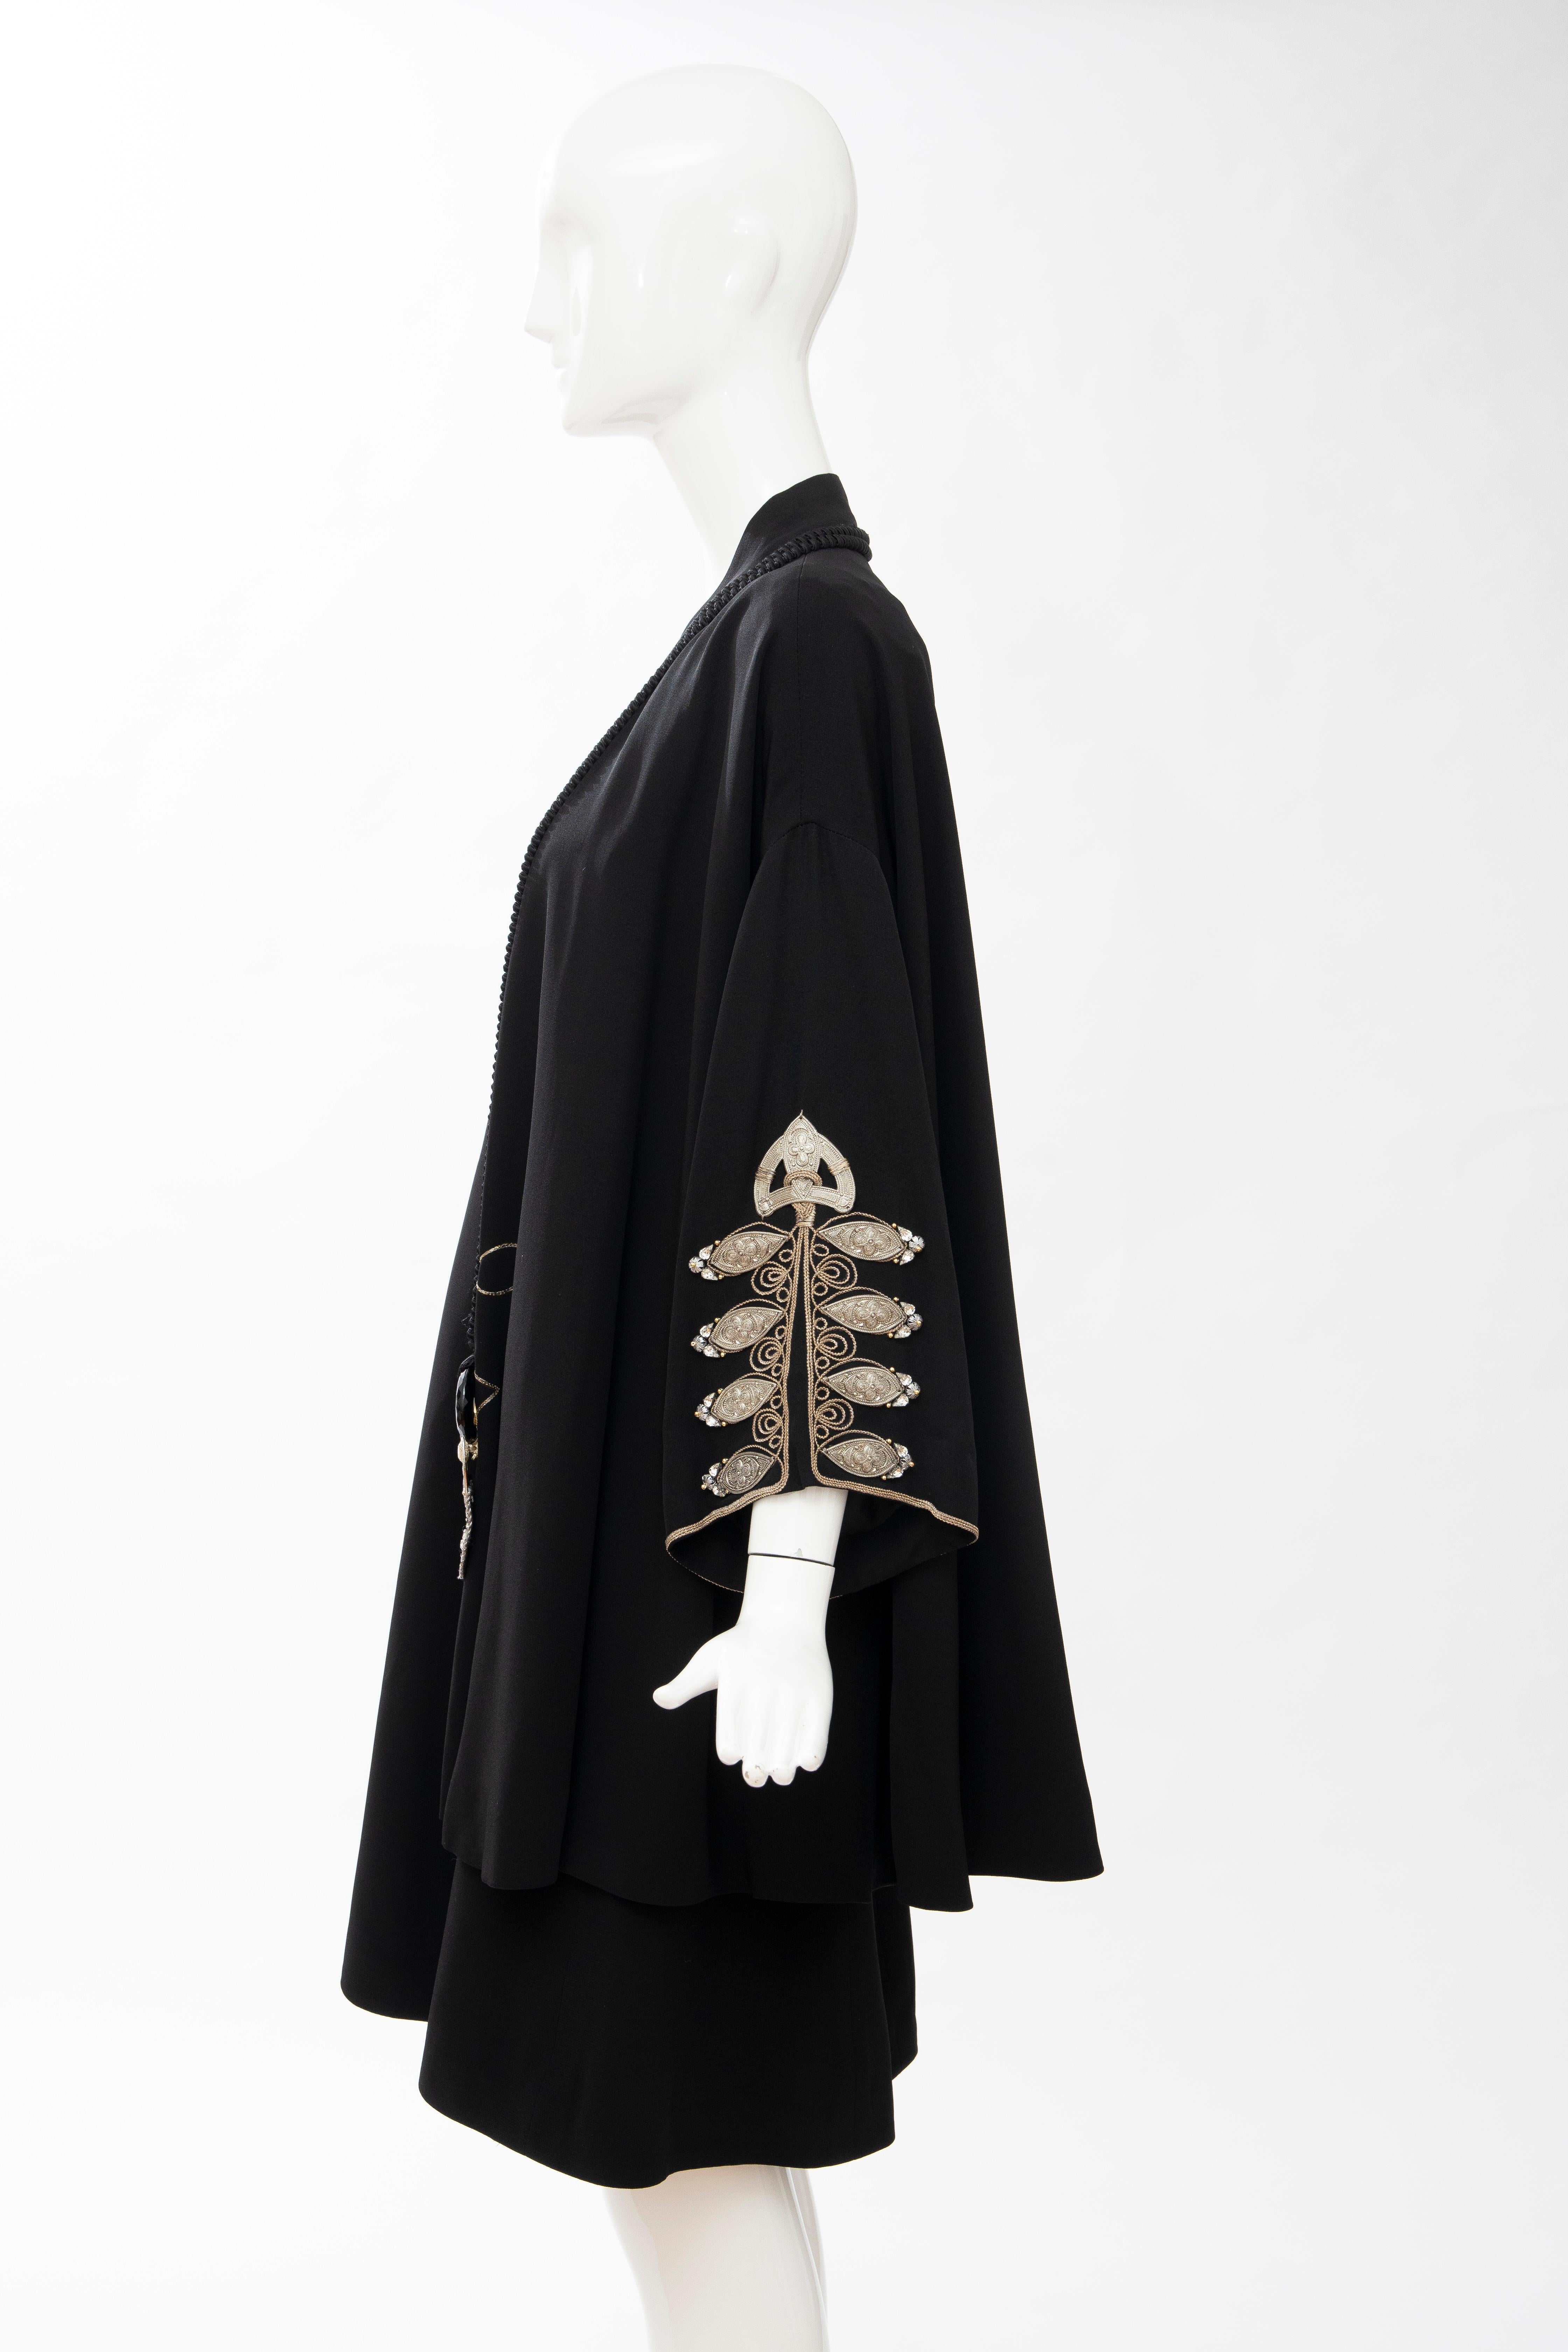 Christian Dior Gianfranco Ferré Numbered Black Embroidered Dress Ensemble, 1991 7